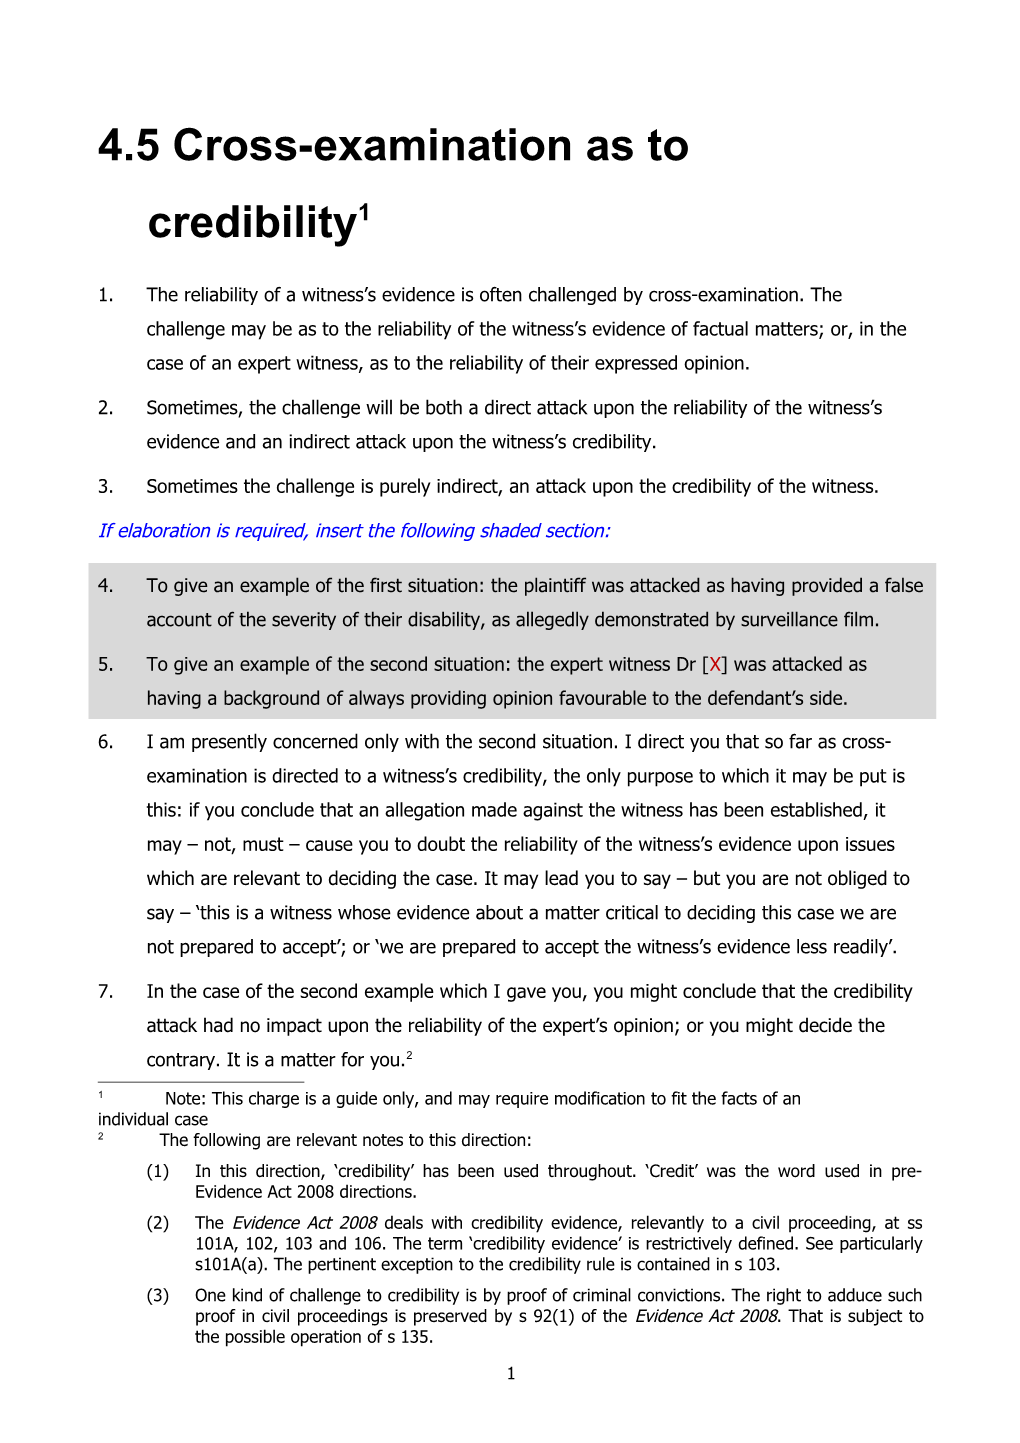 4.5 Cross-Examination As to Credibility 1